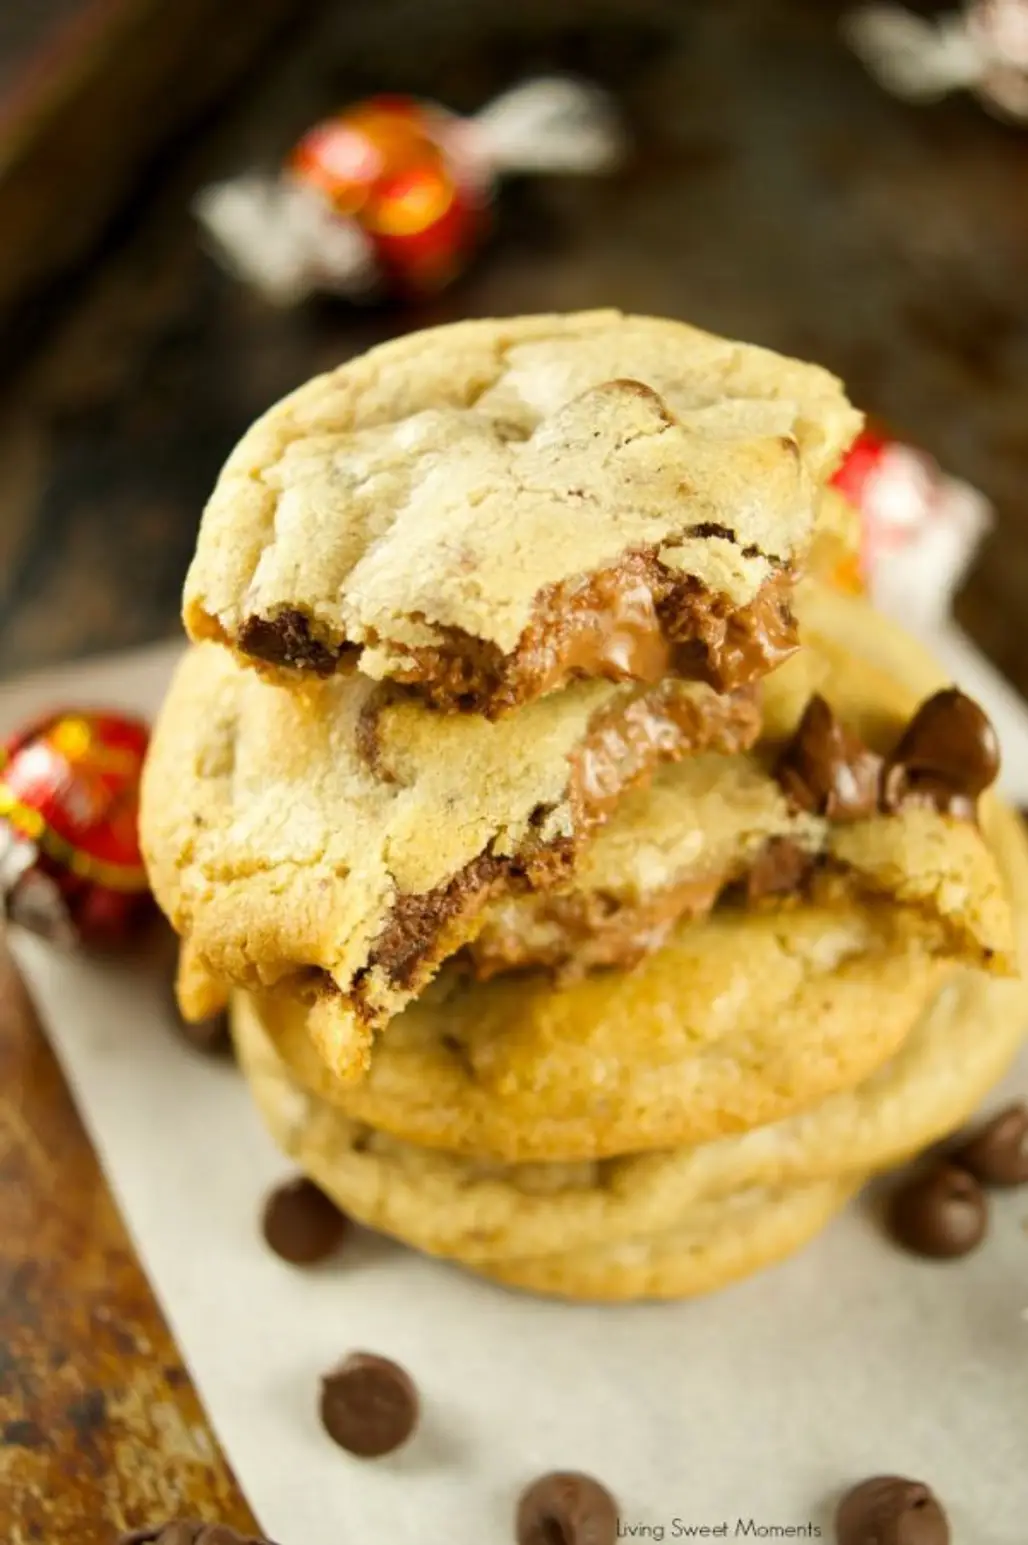 Truffle Stuffed Chocolate Cookies